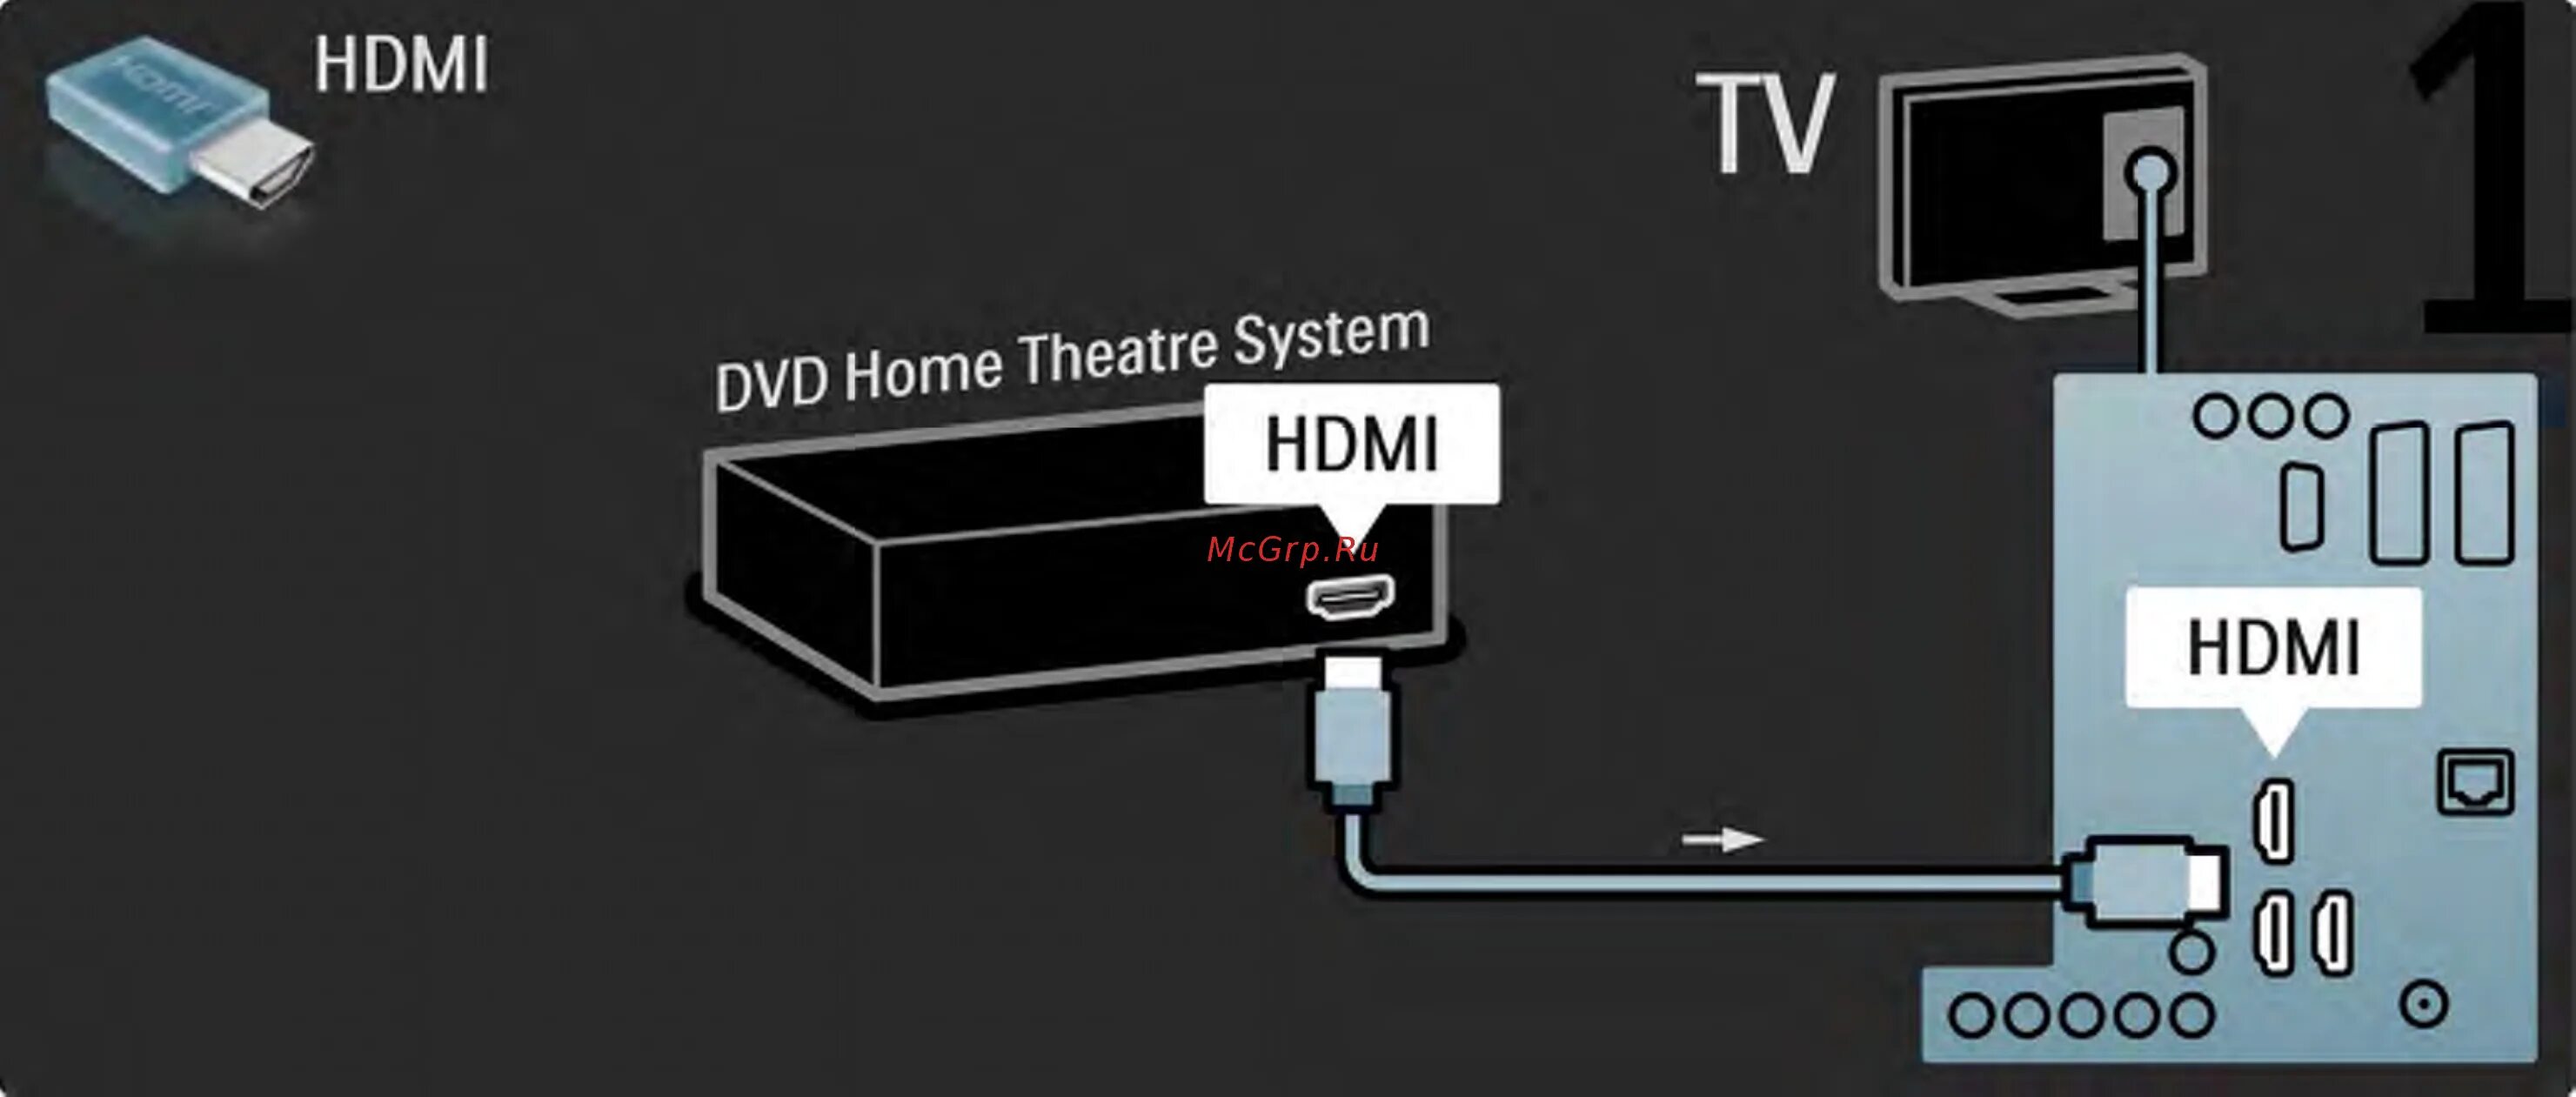 Philips телевизоры подключение. Подключение DVD К телевизору. Onelink HDMI System приемник. Кабель для подключения DVD плеера Philips к телевизору Philips. Philips 47pfl8404h/60 подключить net TV.